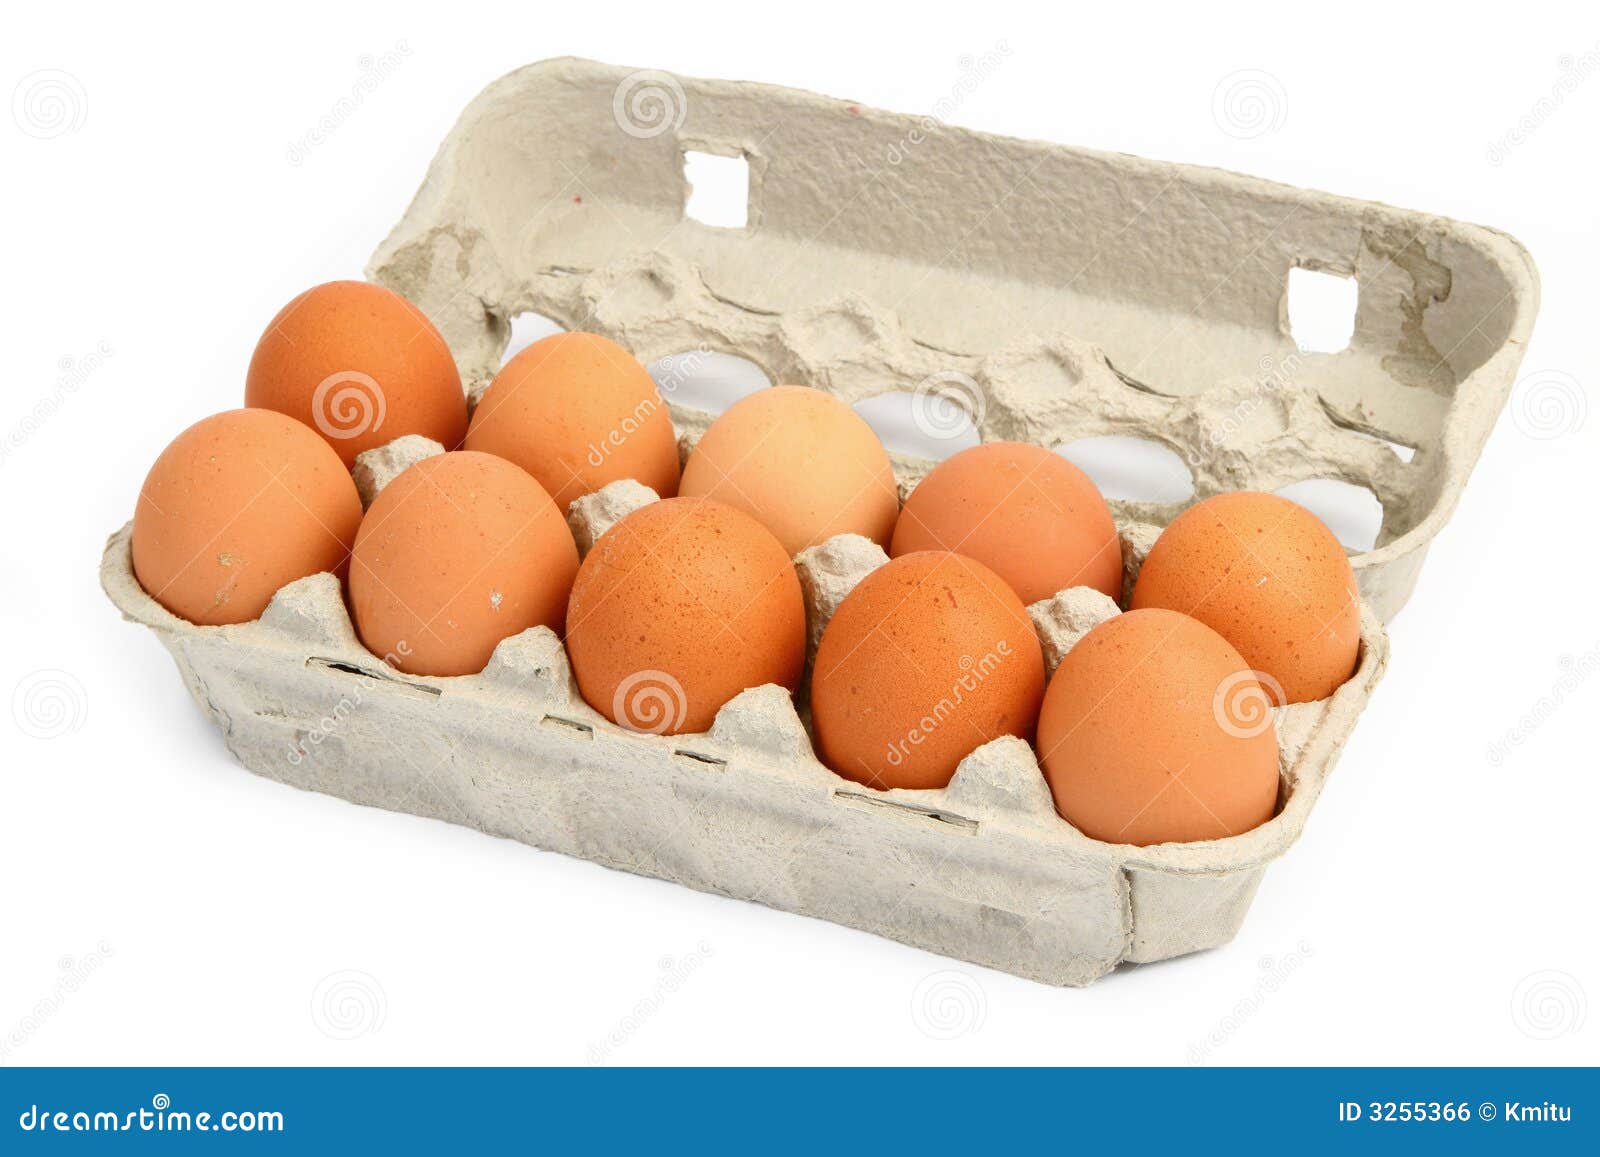 ten eggs in a box